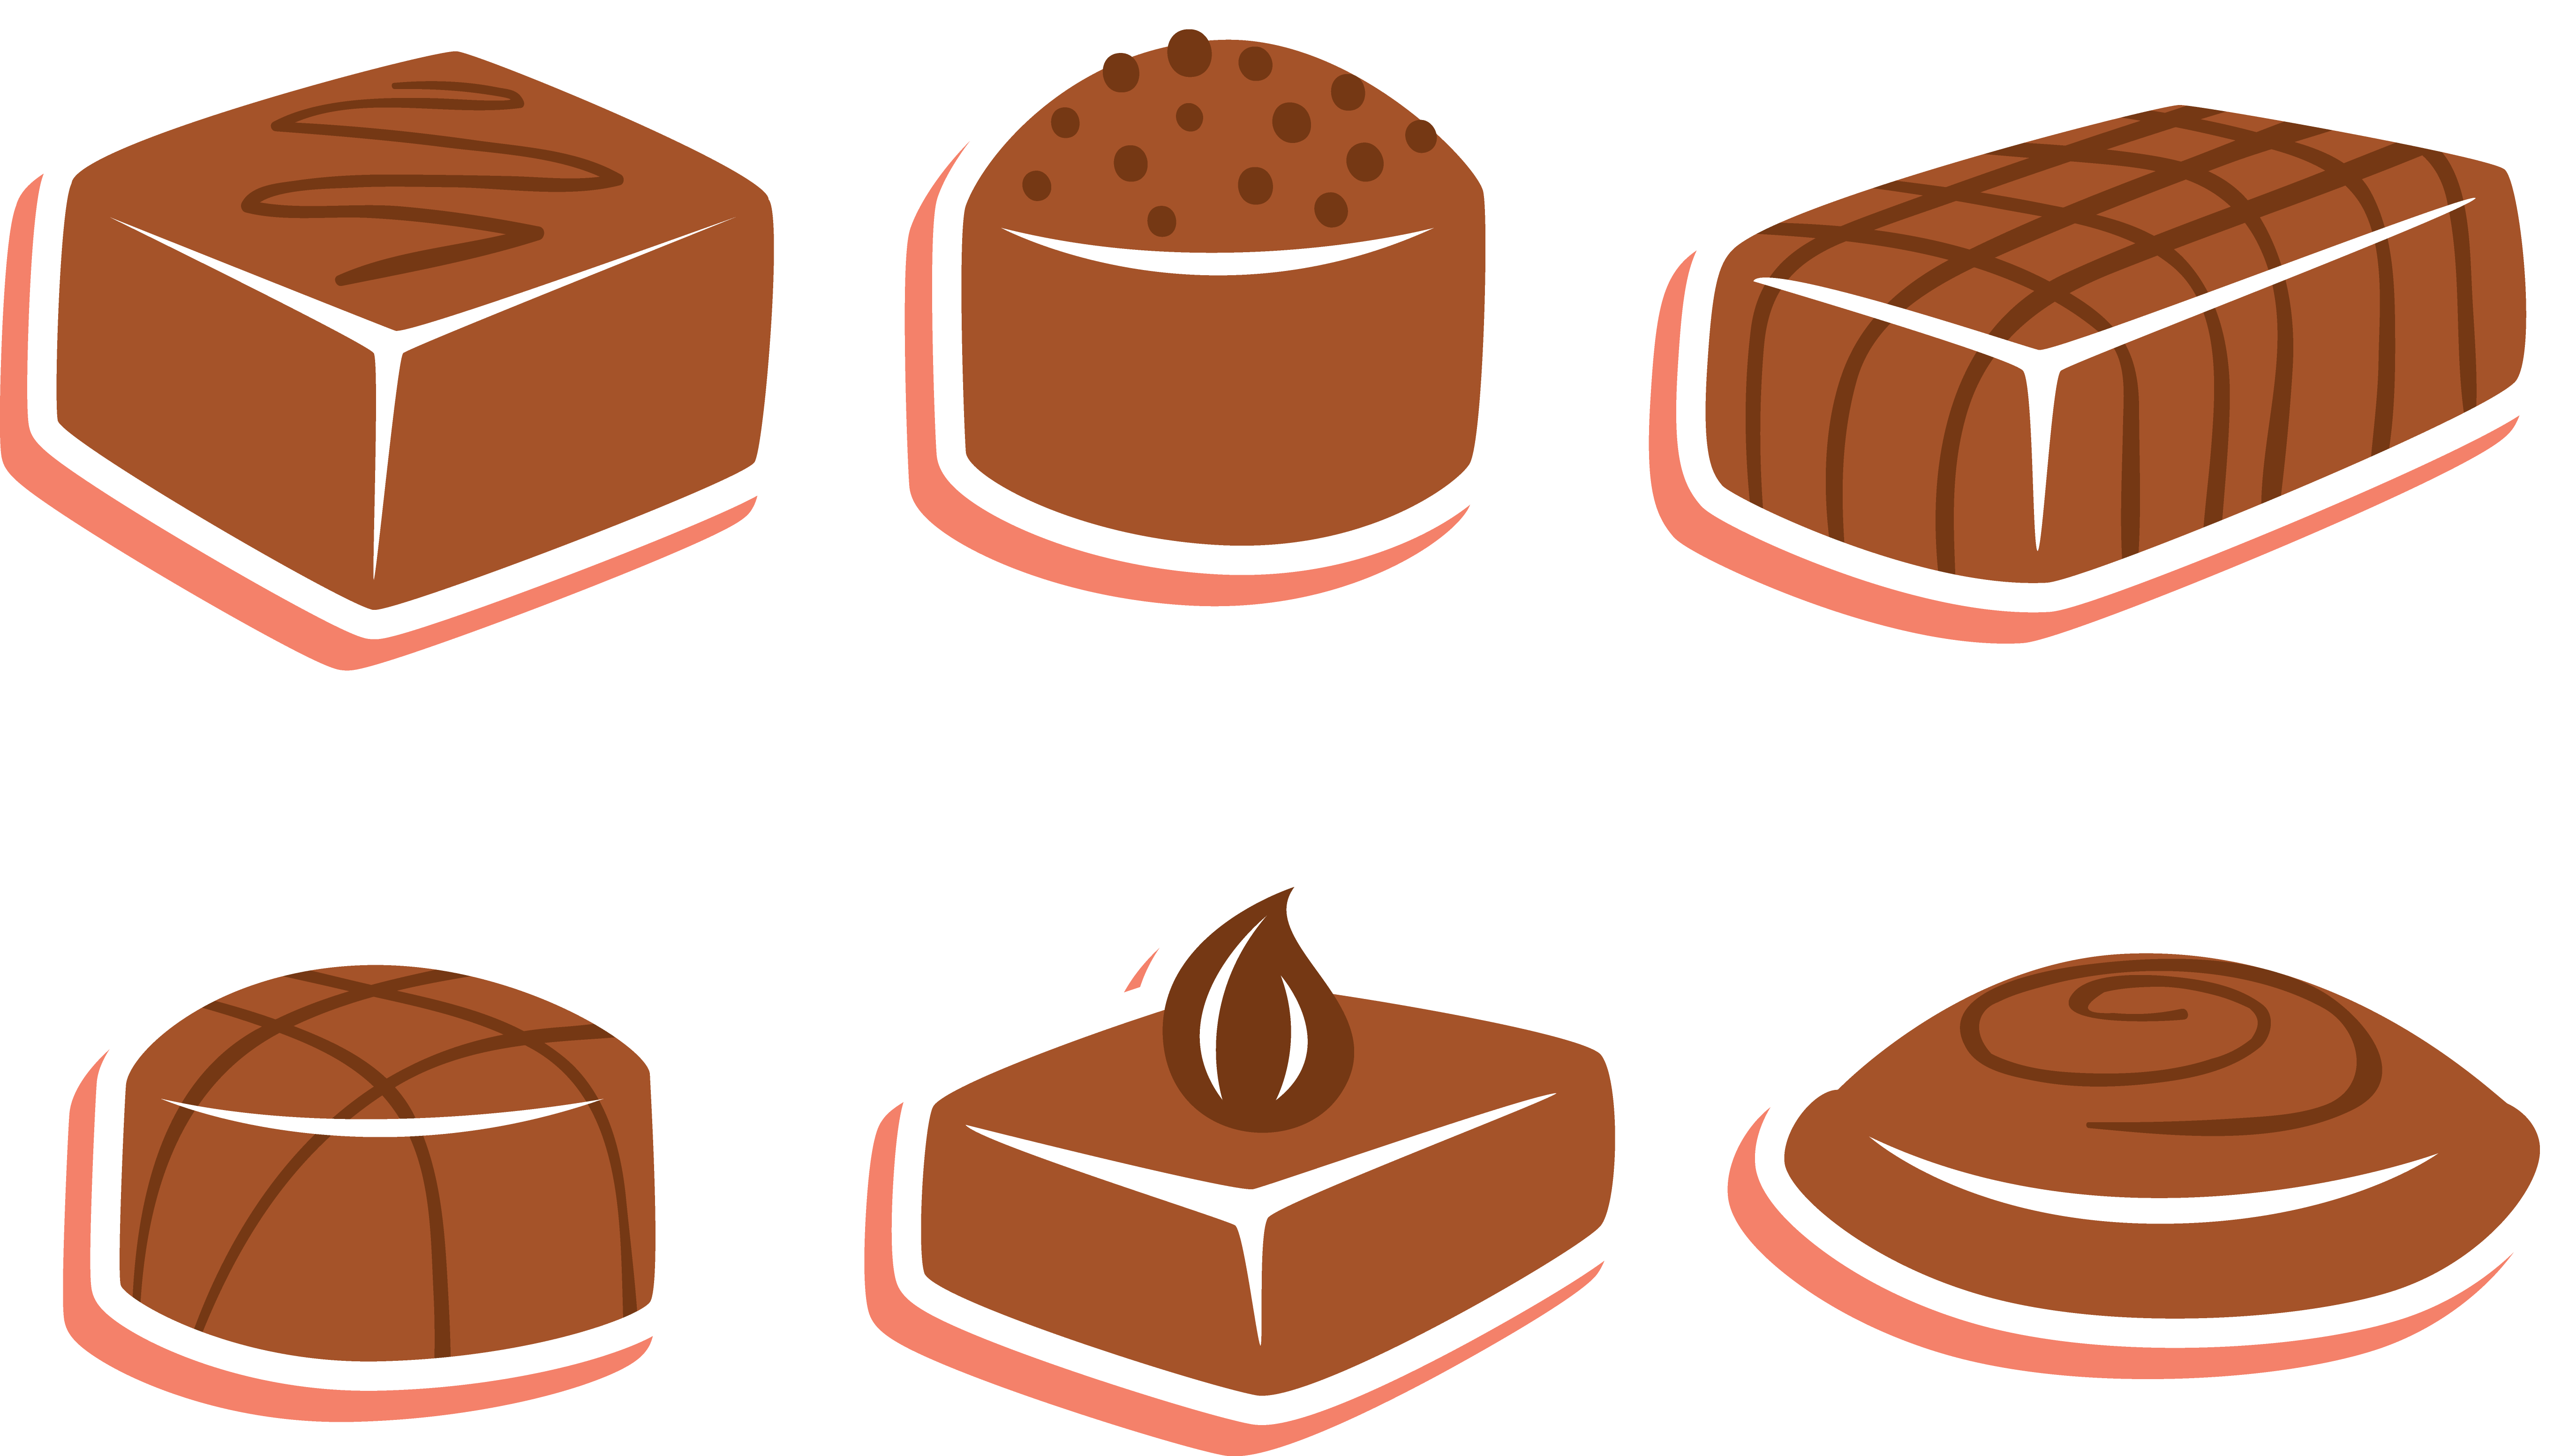 Chocolate Bar Chocolate Cake Lollipop Praline - Chocolate Bar Chocolate Cake Lollipop Praline (5479x3106)